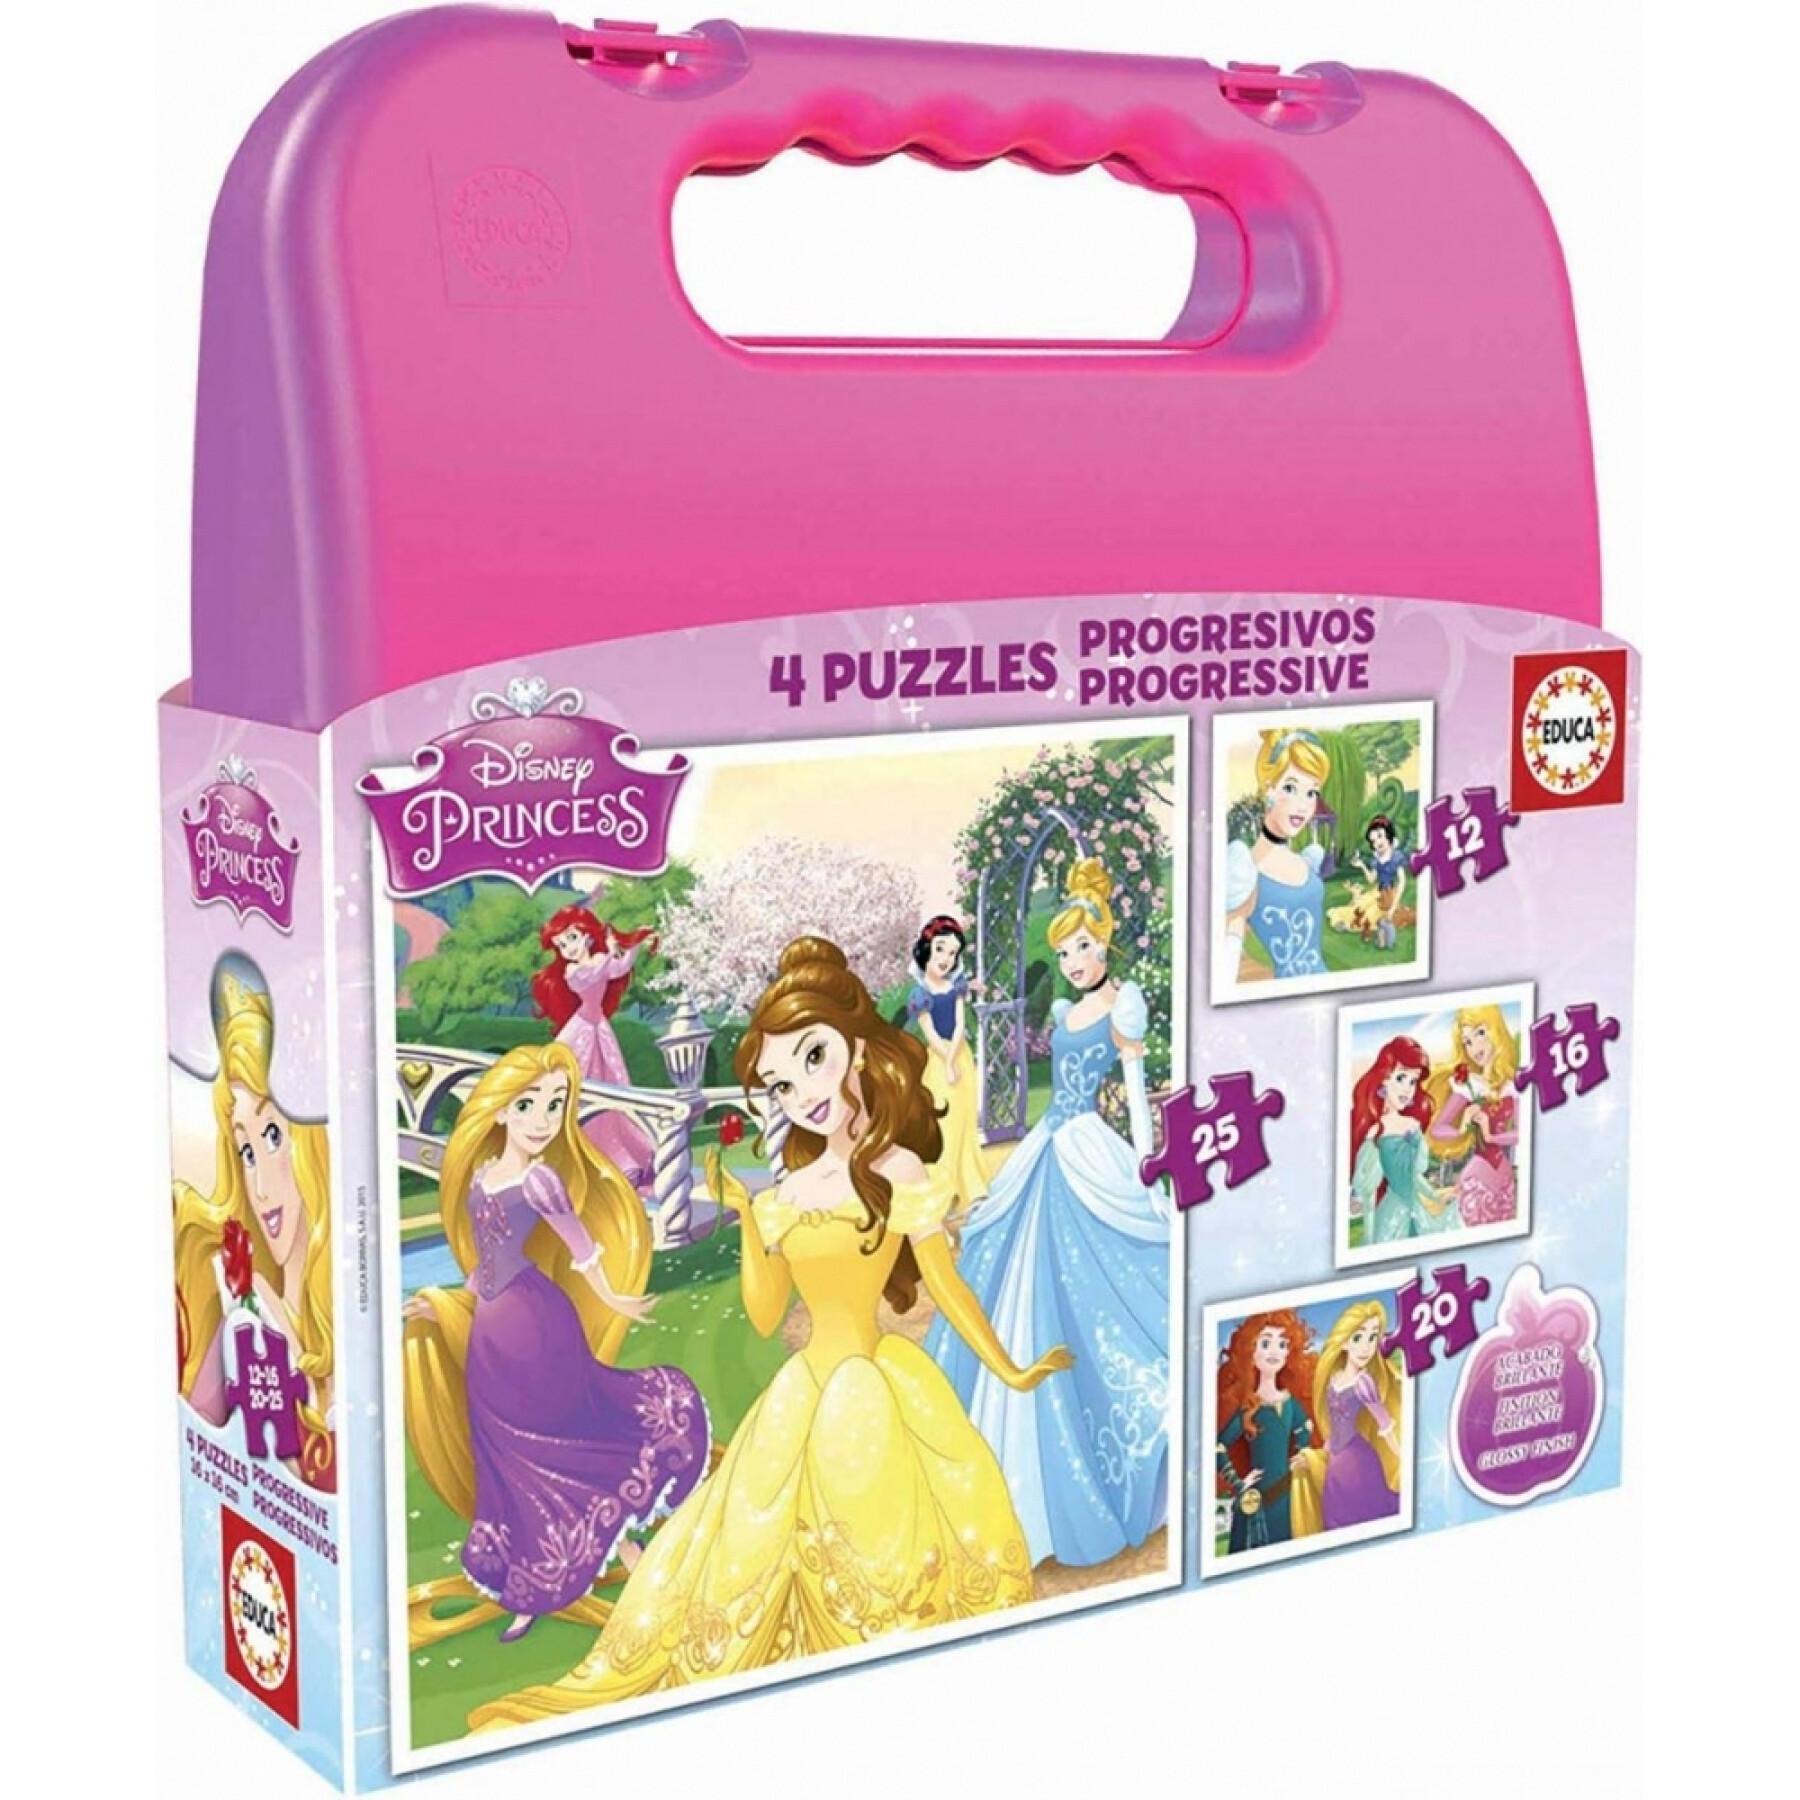 Case of 4 puzzles Disney Princess